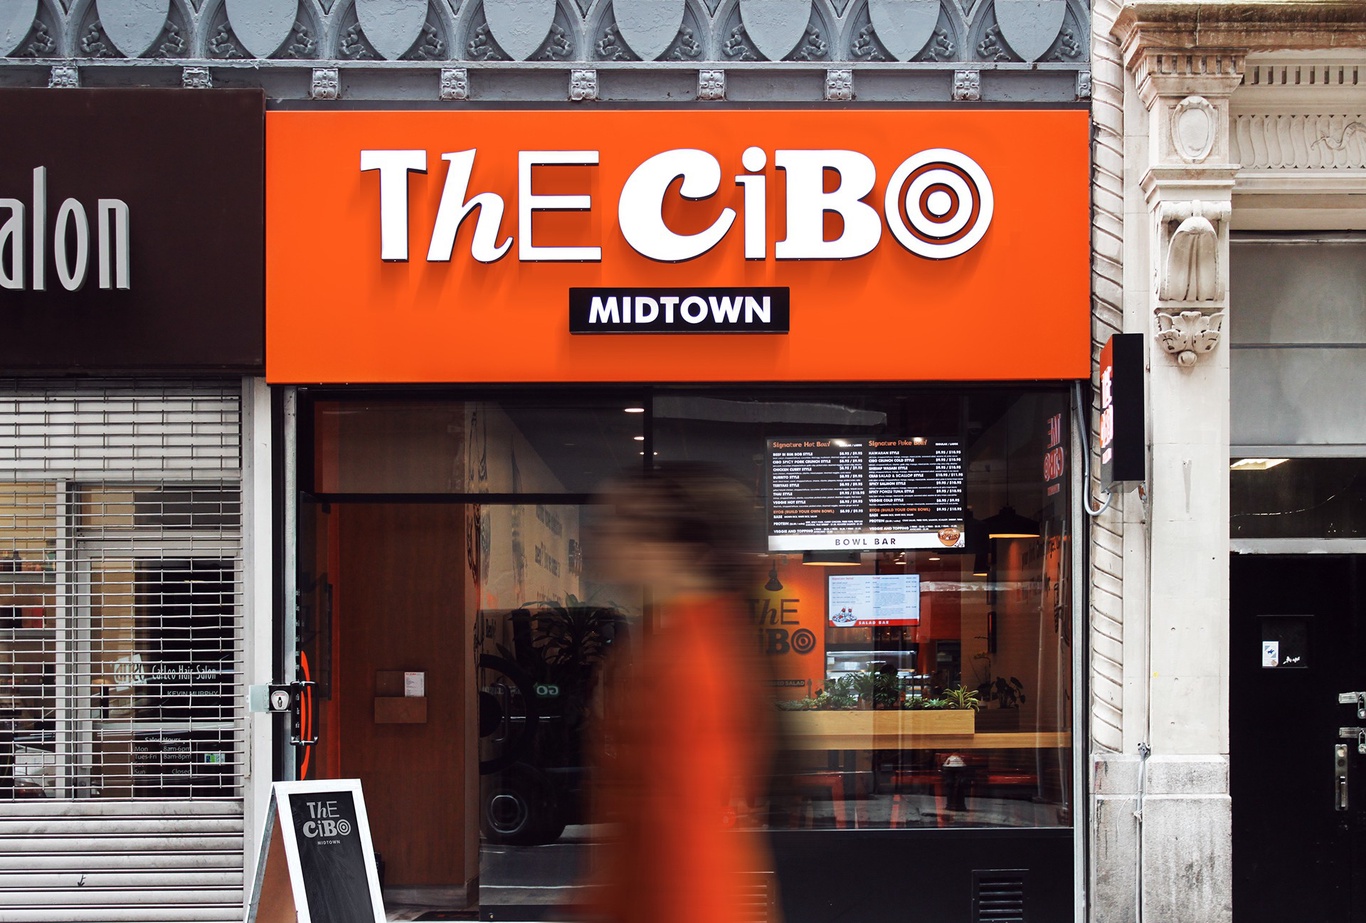 Фирменный стиль ресторана The Cibo